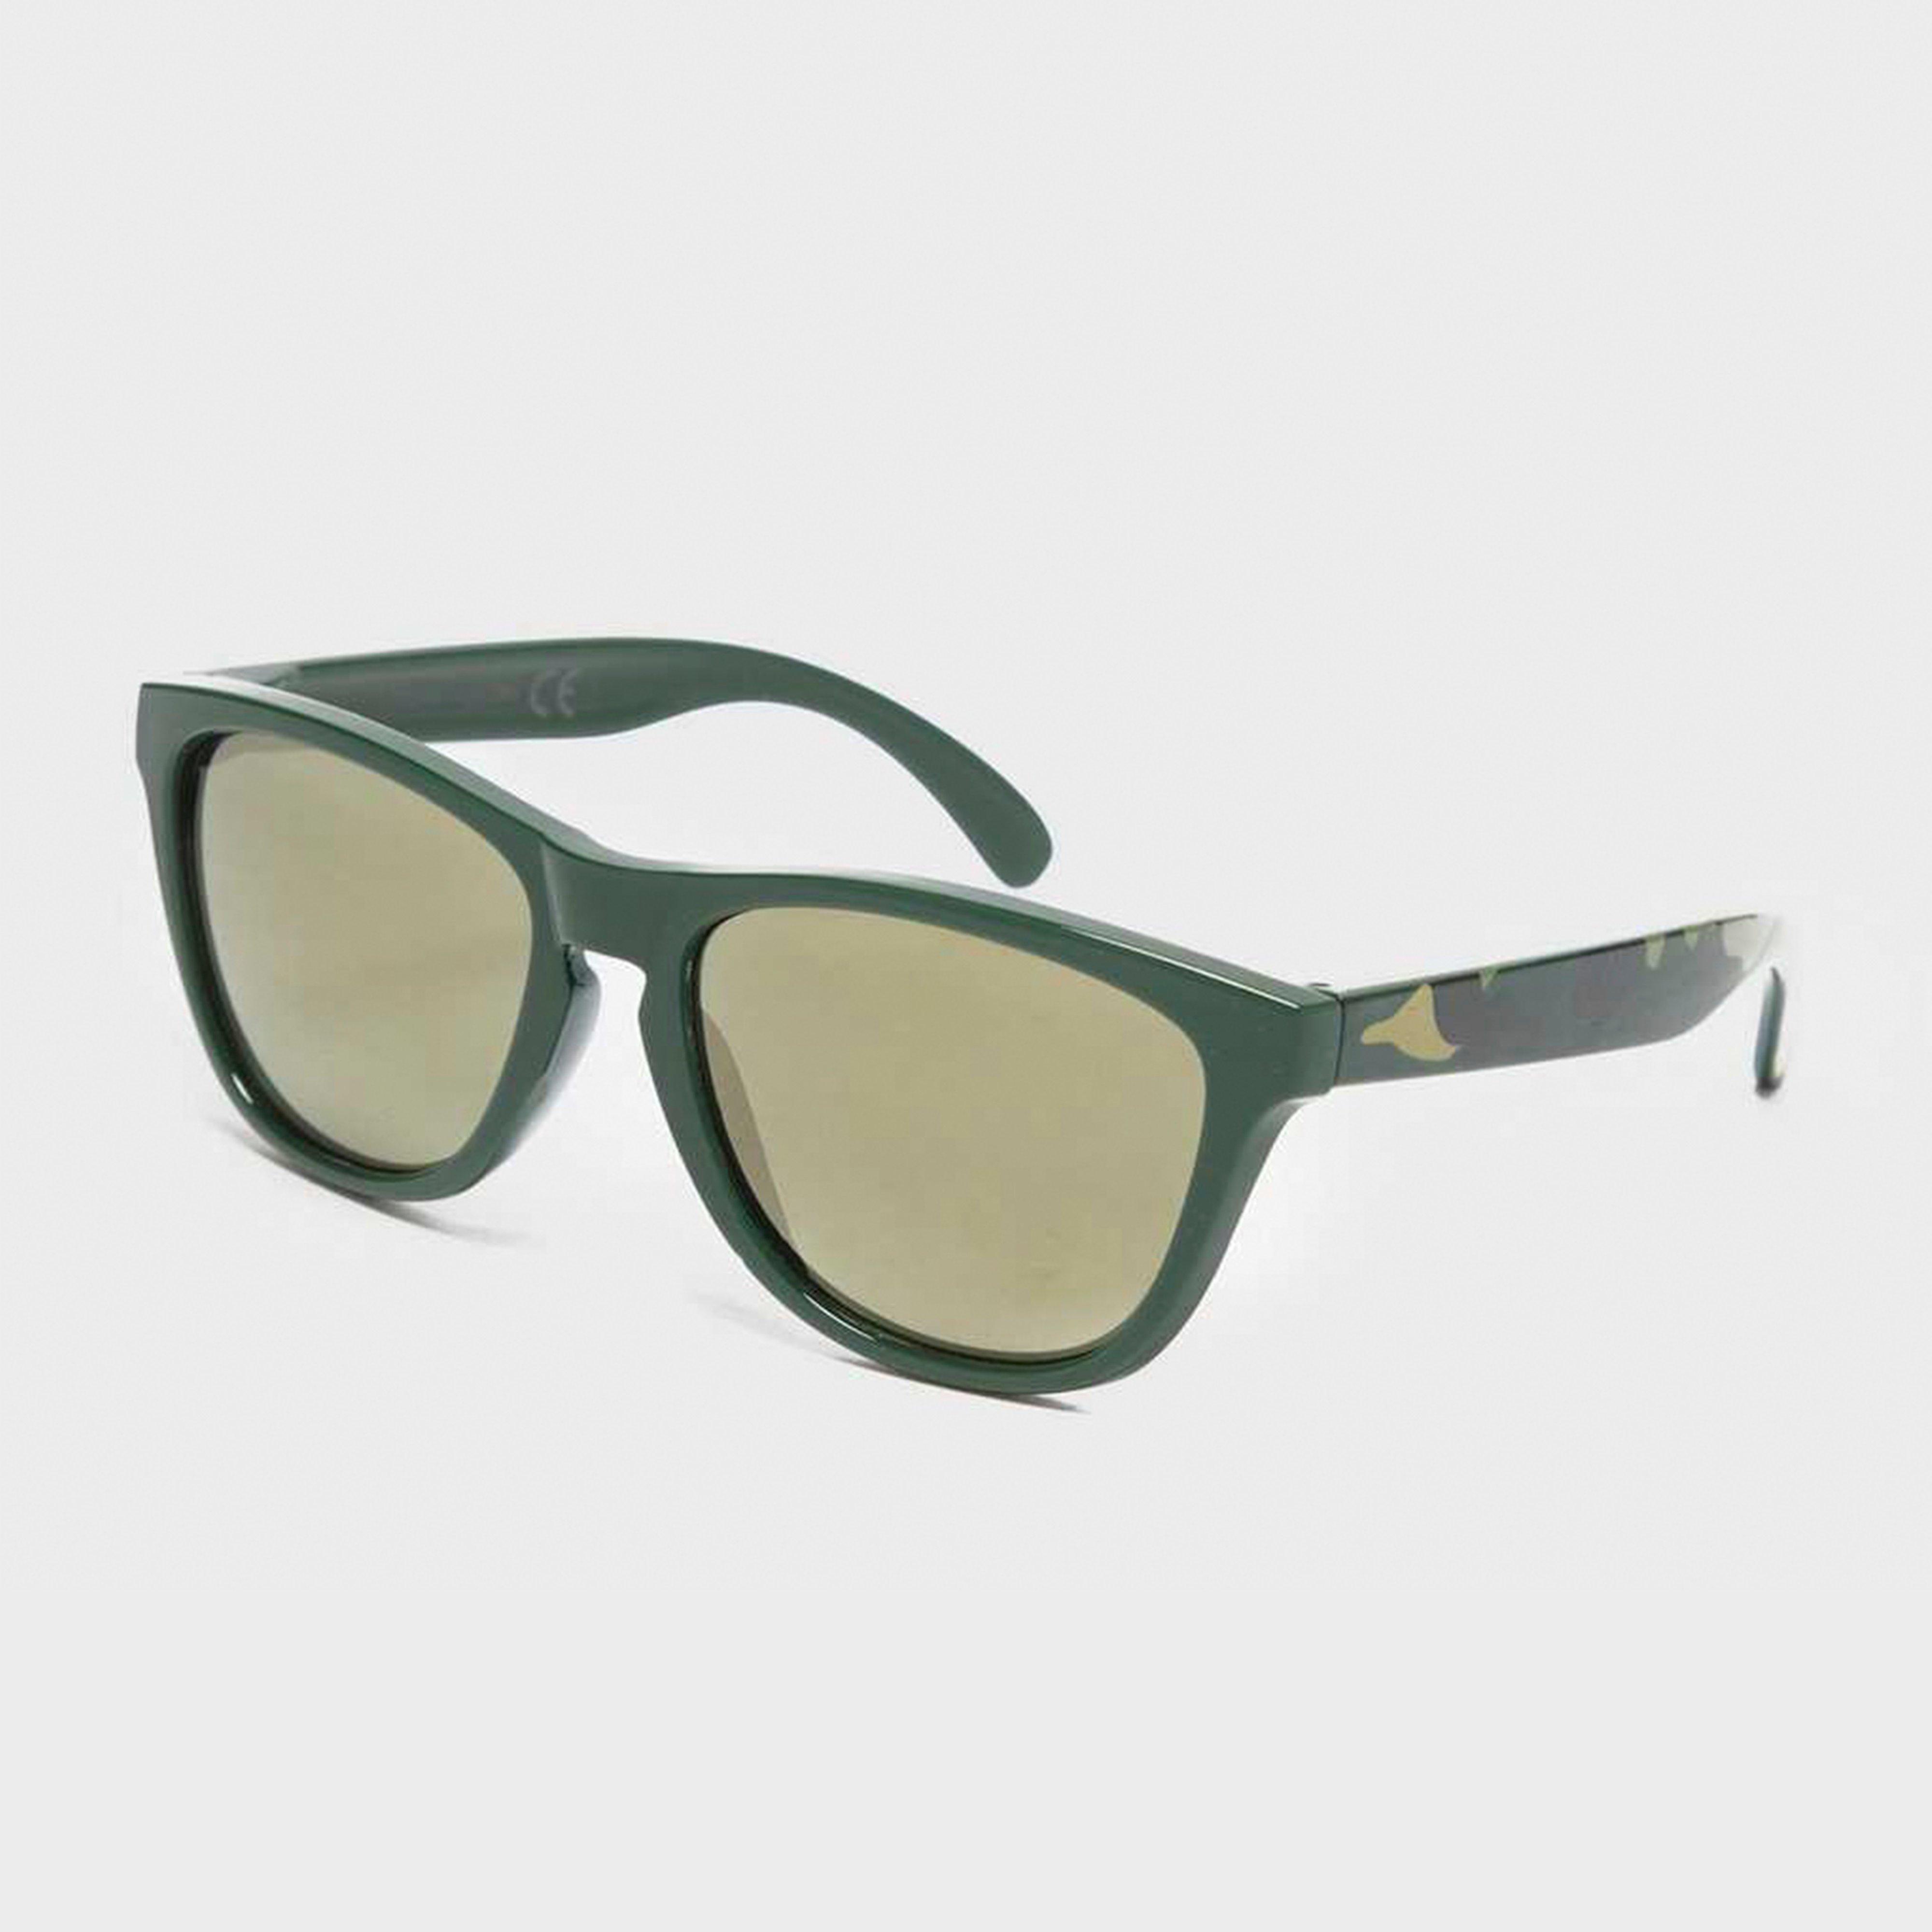 Peter Storm Kids Camo Sunglasses - Green/grn  Green/grn